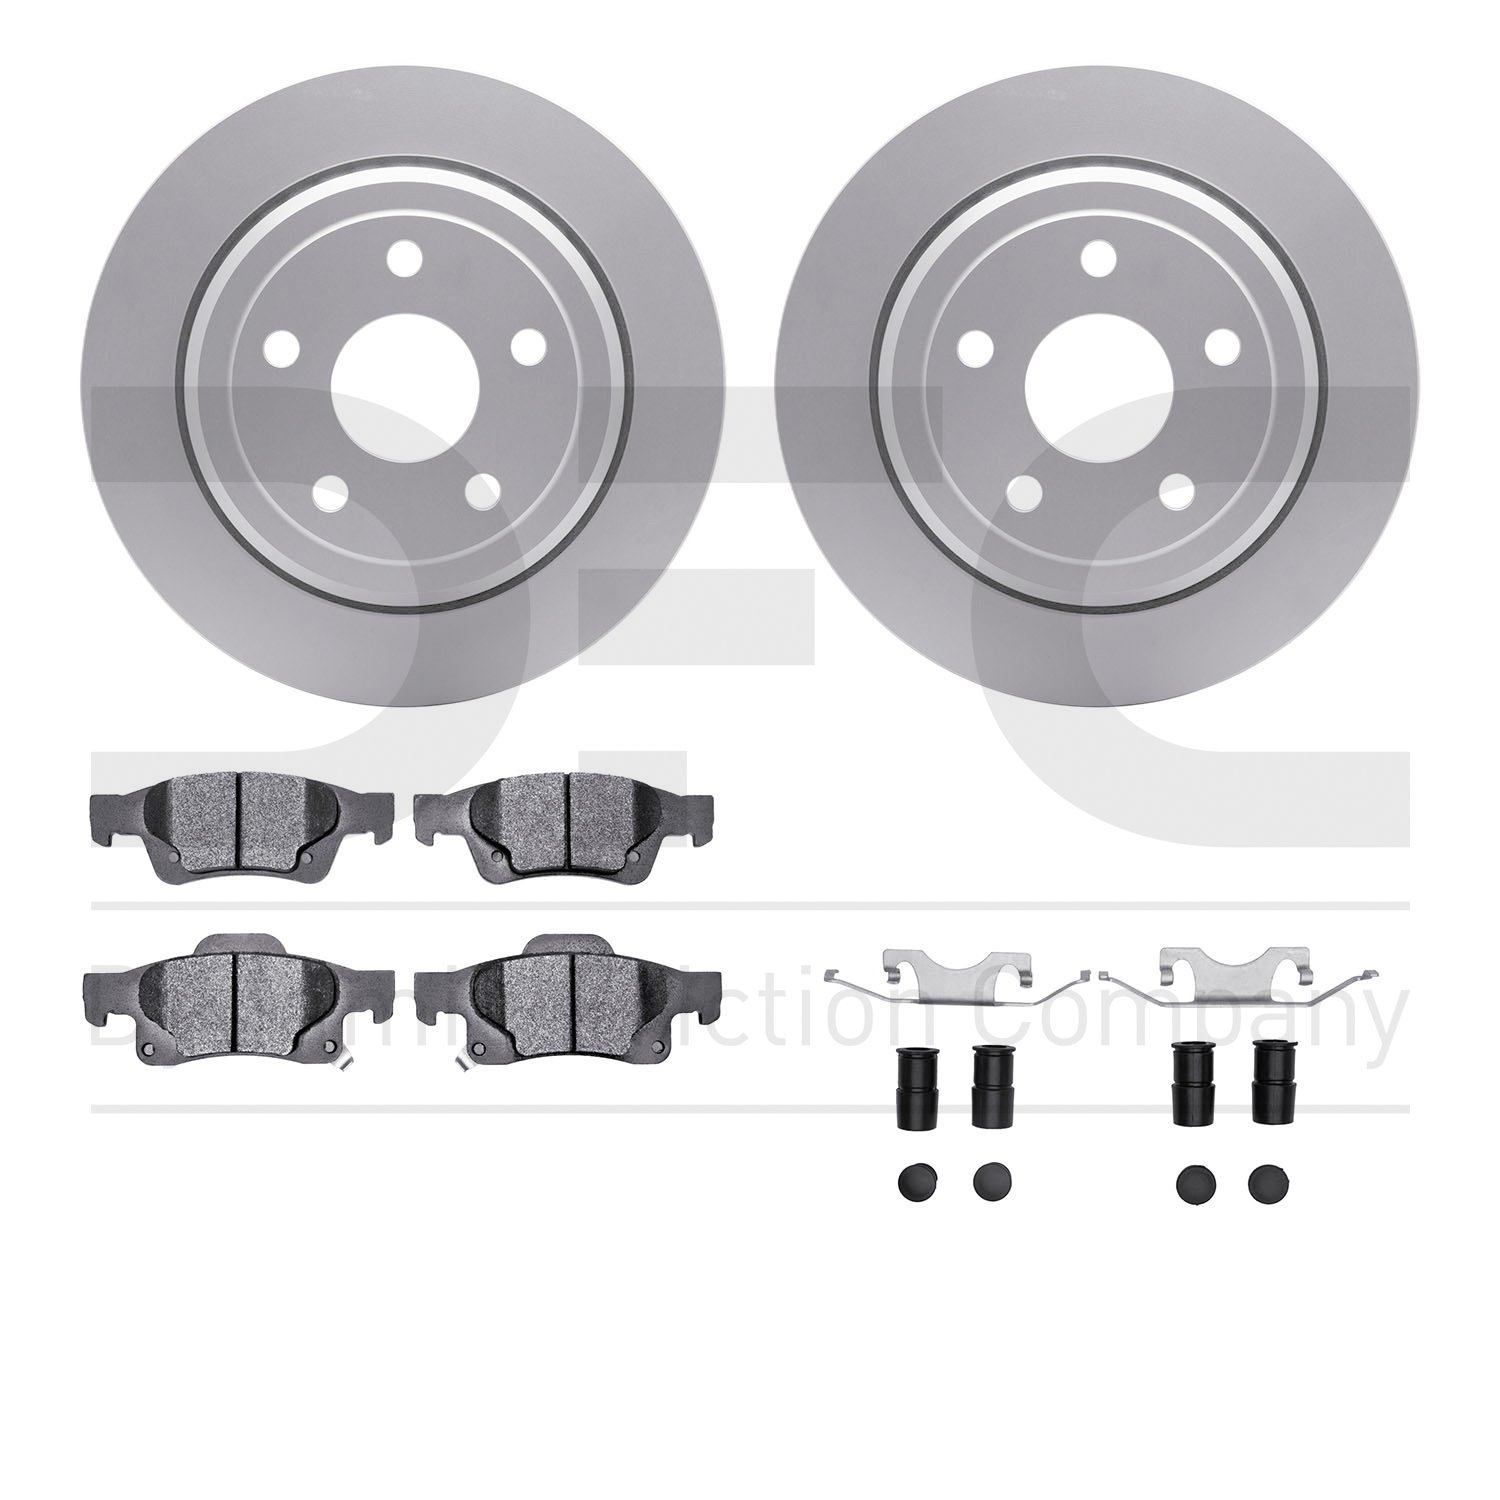 4412-42007 Geospec Brake Rotors with Ultimate-Duty Brake Pads & Hardware, Fits Select Mopar, Position: Rear